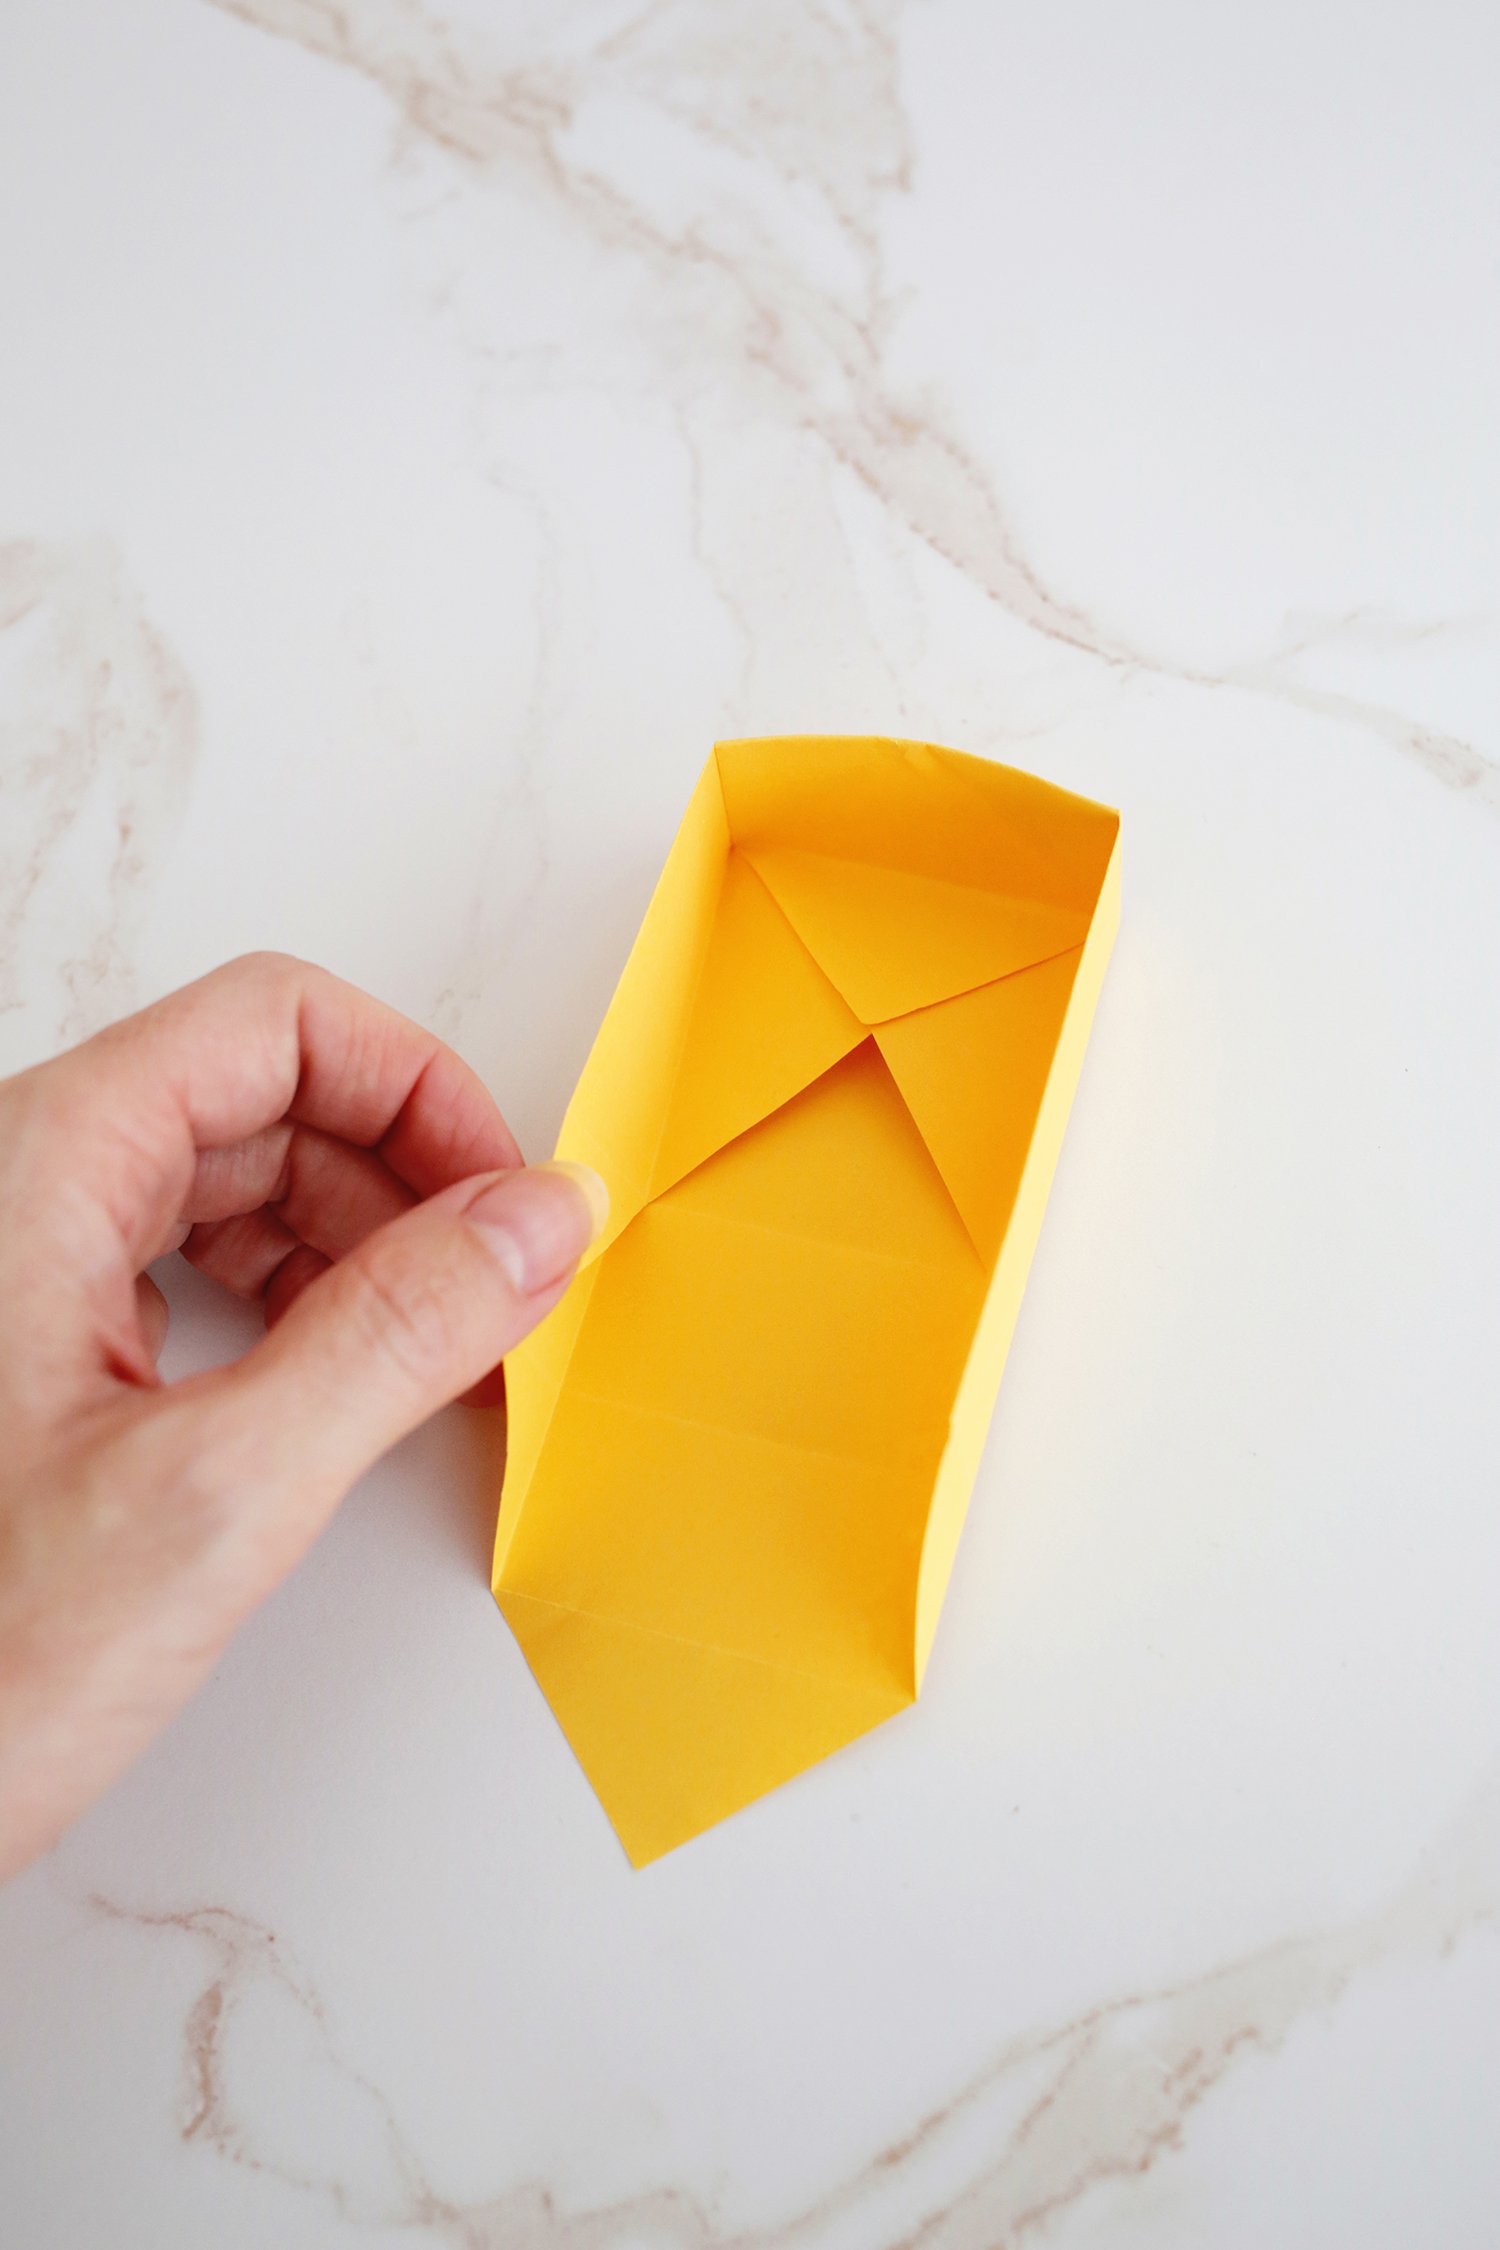 folding an origami box